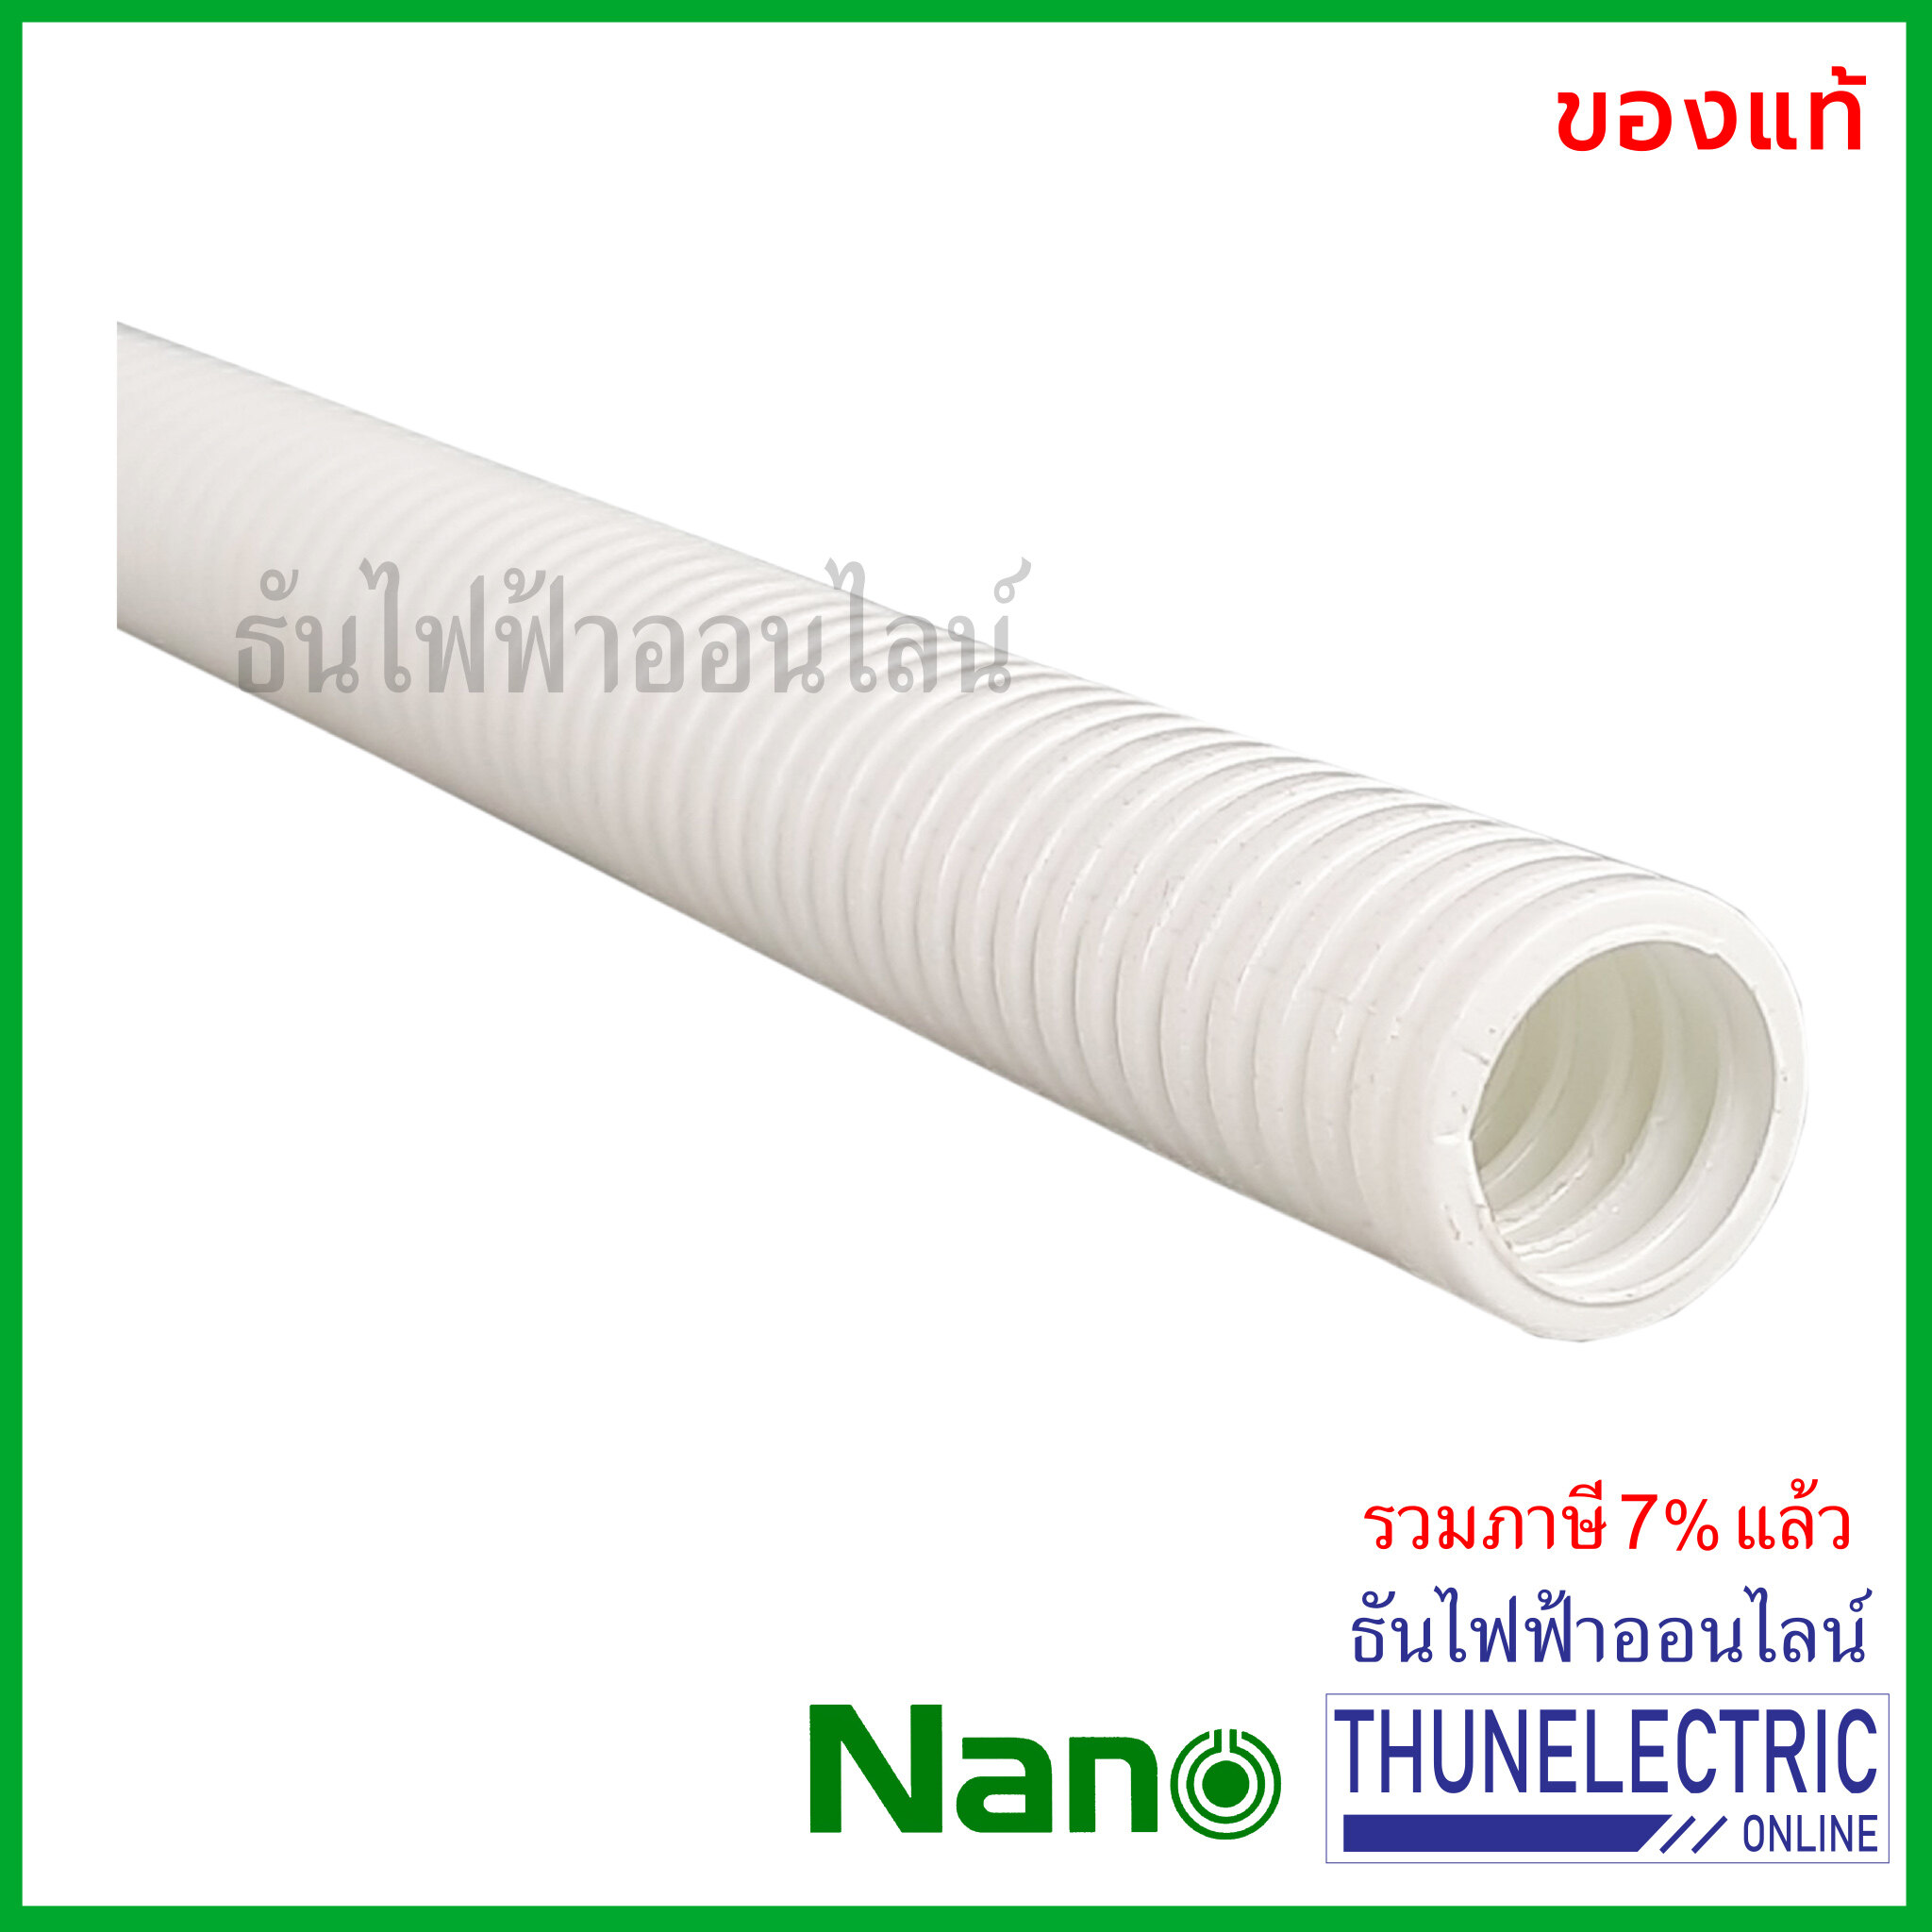 NANO ท่อลูกฟูก สีขาว ขนาด 20 mm ม้วน 50 m (NNCC20) ท่อย่น ท่ออ่อน ท่อเฟล็ก ท่อ flex pvc นาโน ธันไฟฟ้า